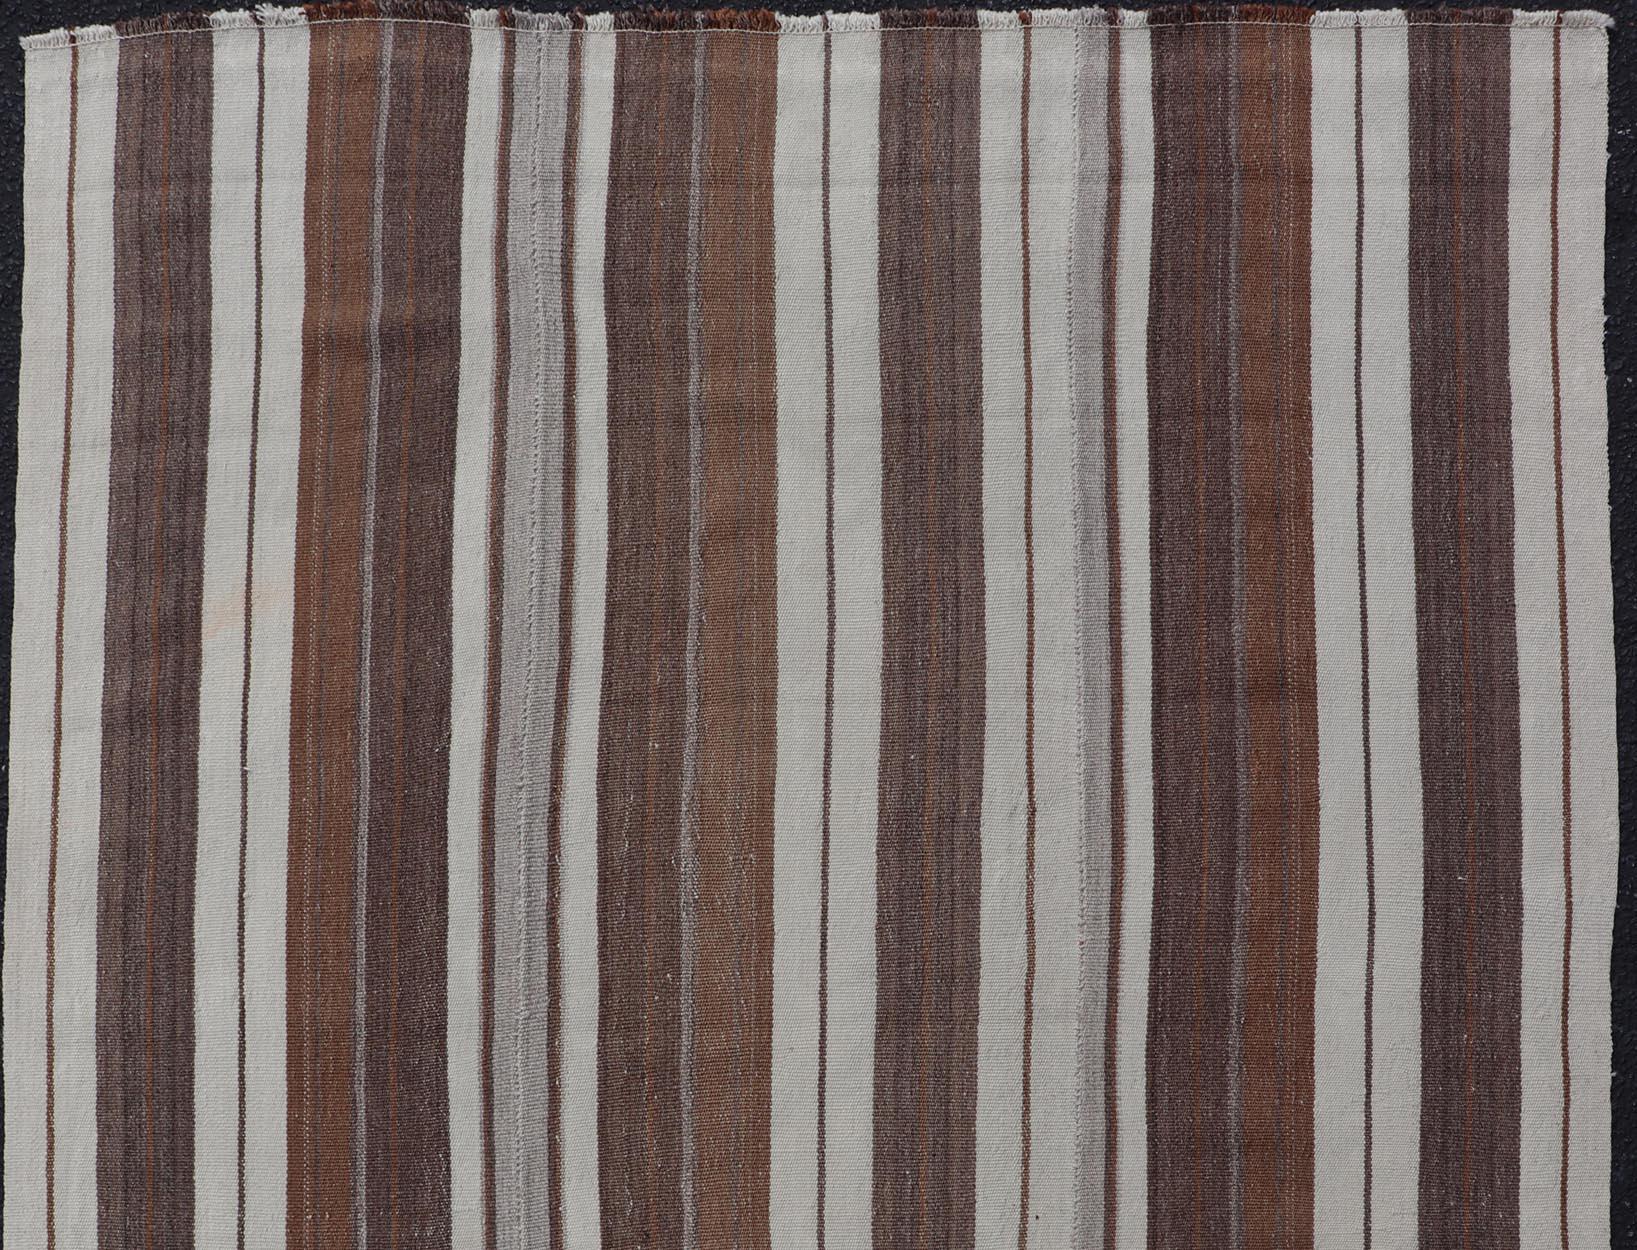 Kilim Stripe Design Turkish Vintage Flat-Weave Rug in Brown, Cognac, Ivory, and Gray For Sale